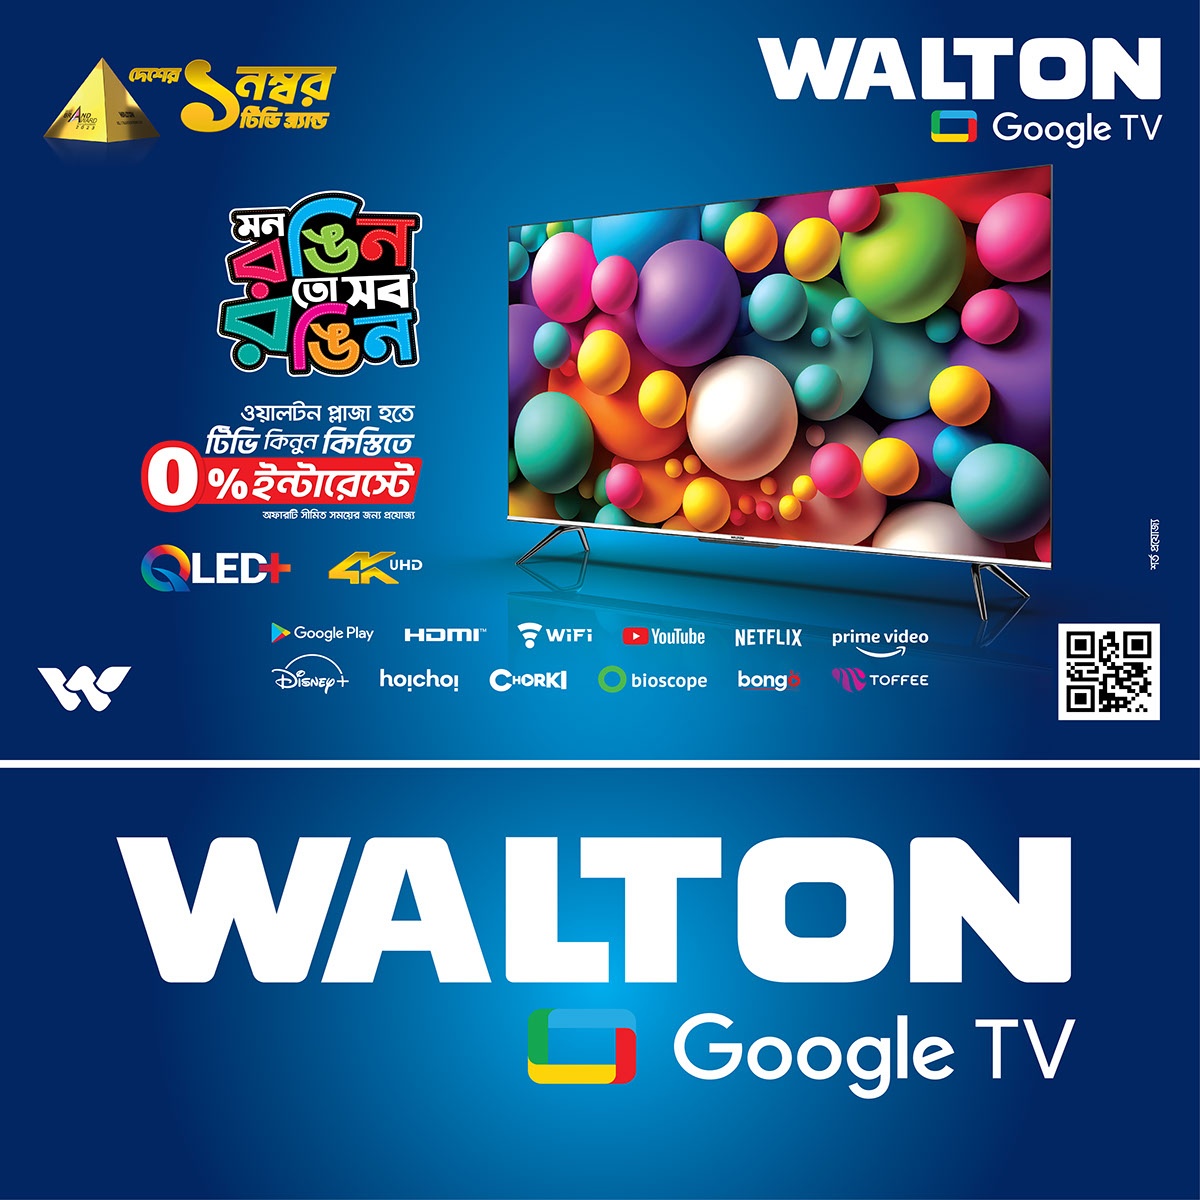 walton google tv rendition image